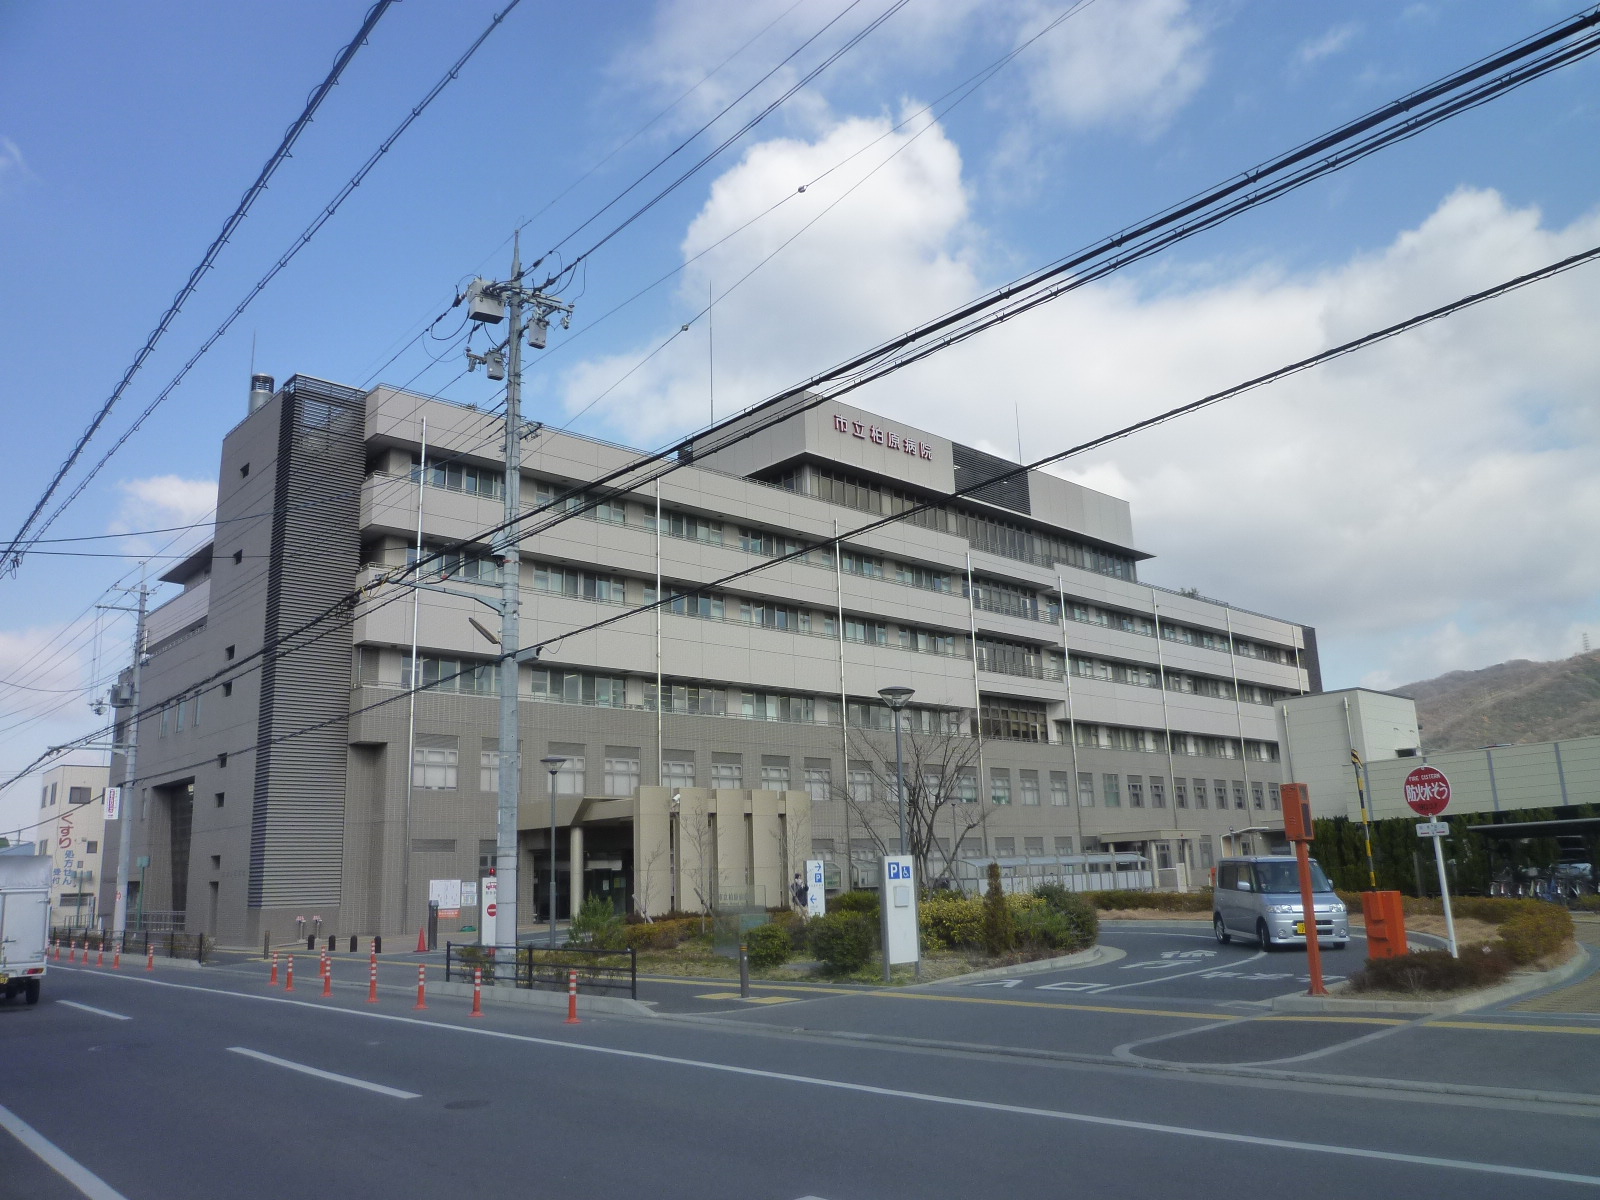 Hospital. 1736m until the Municipal Kashiwabara Hospital (Hospital)